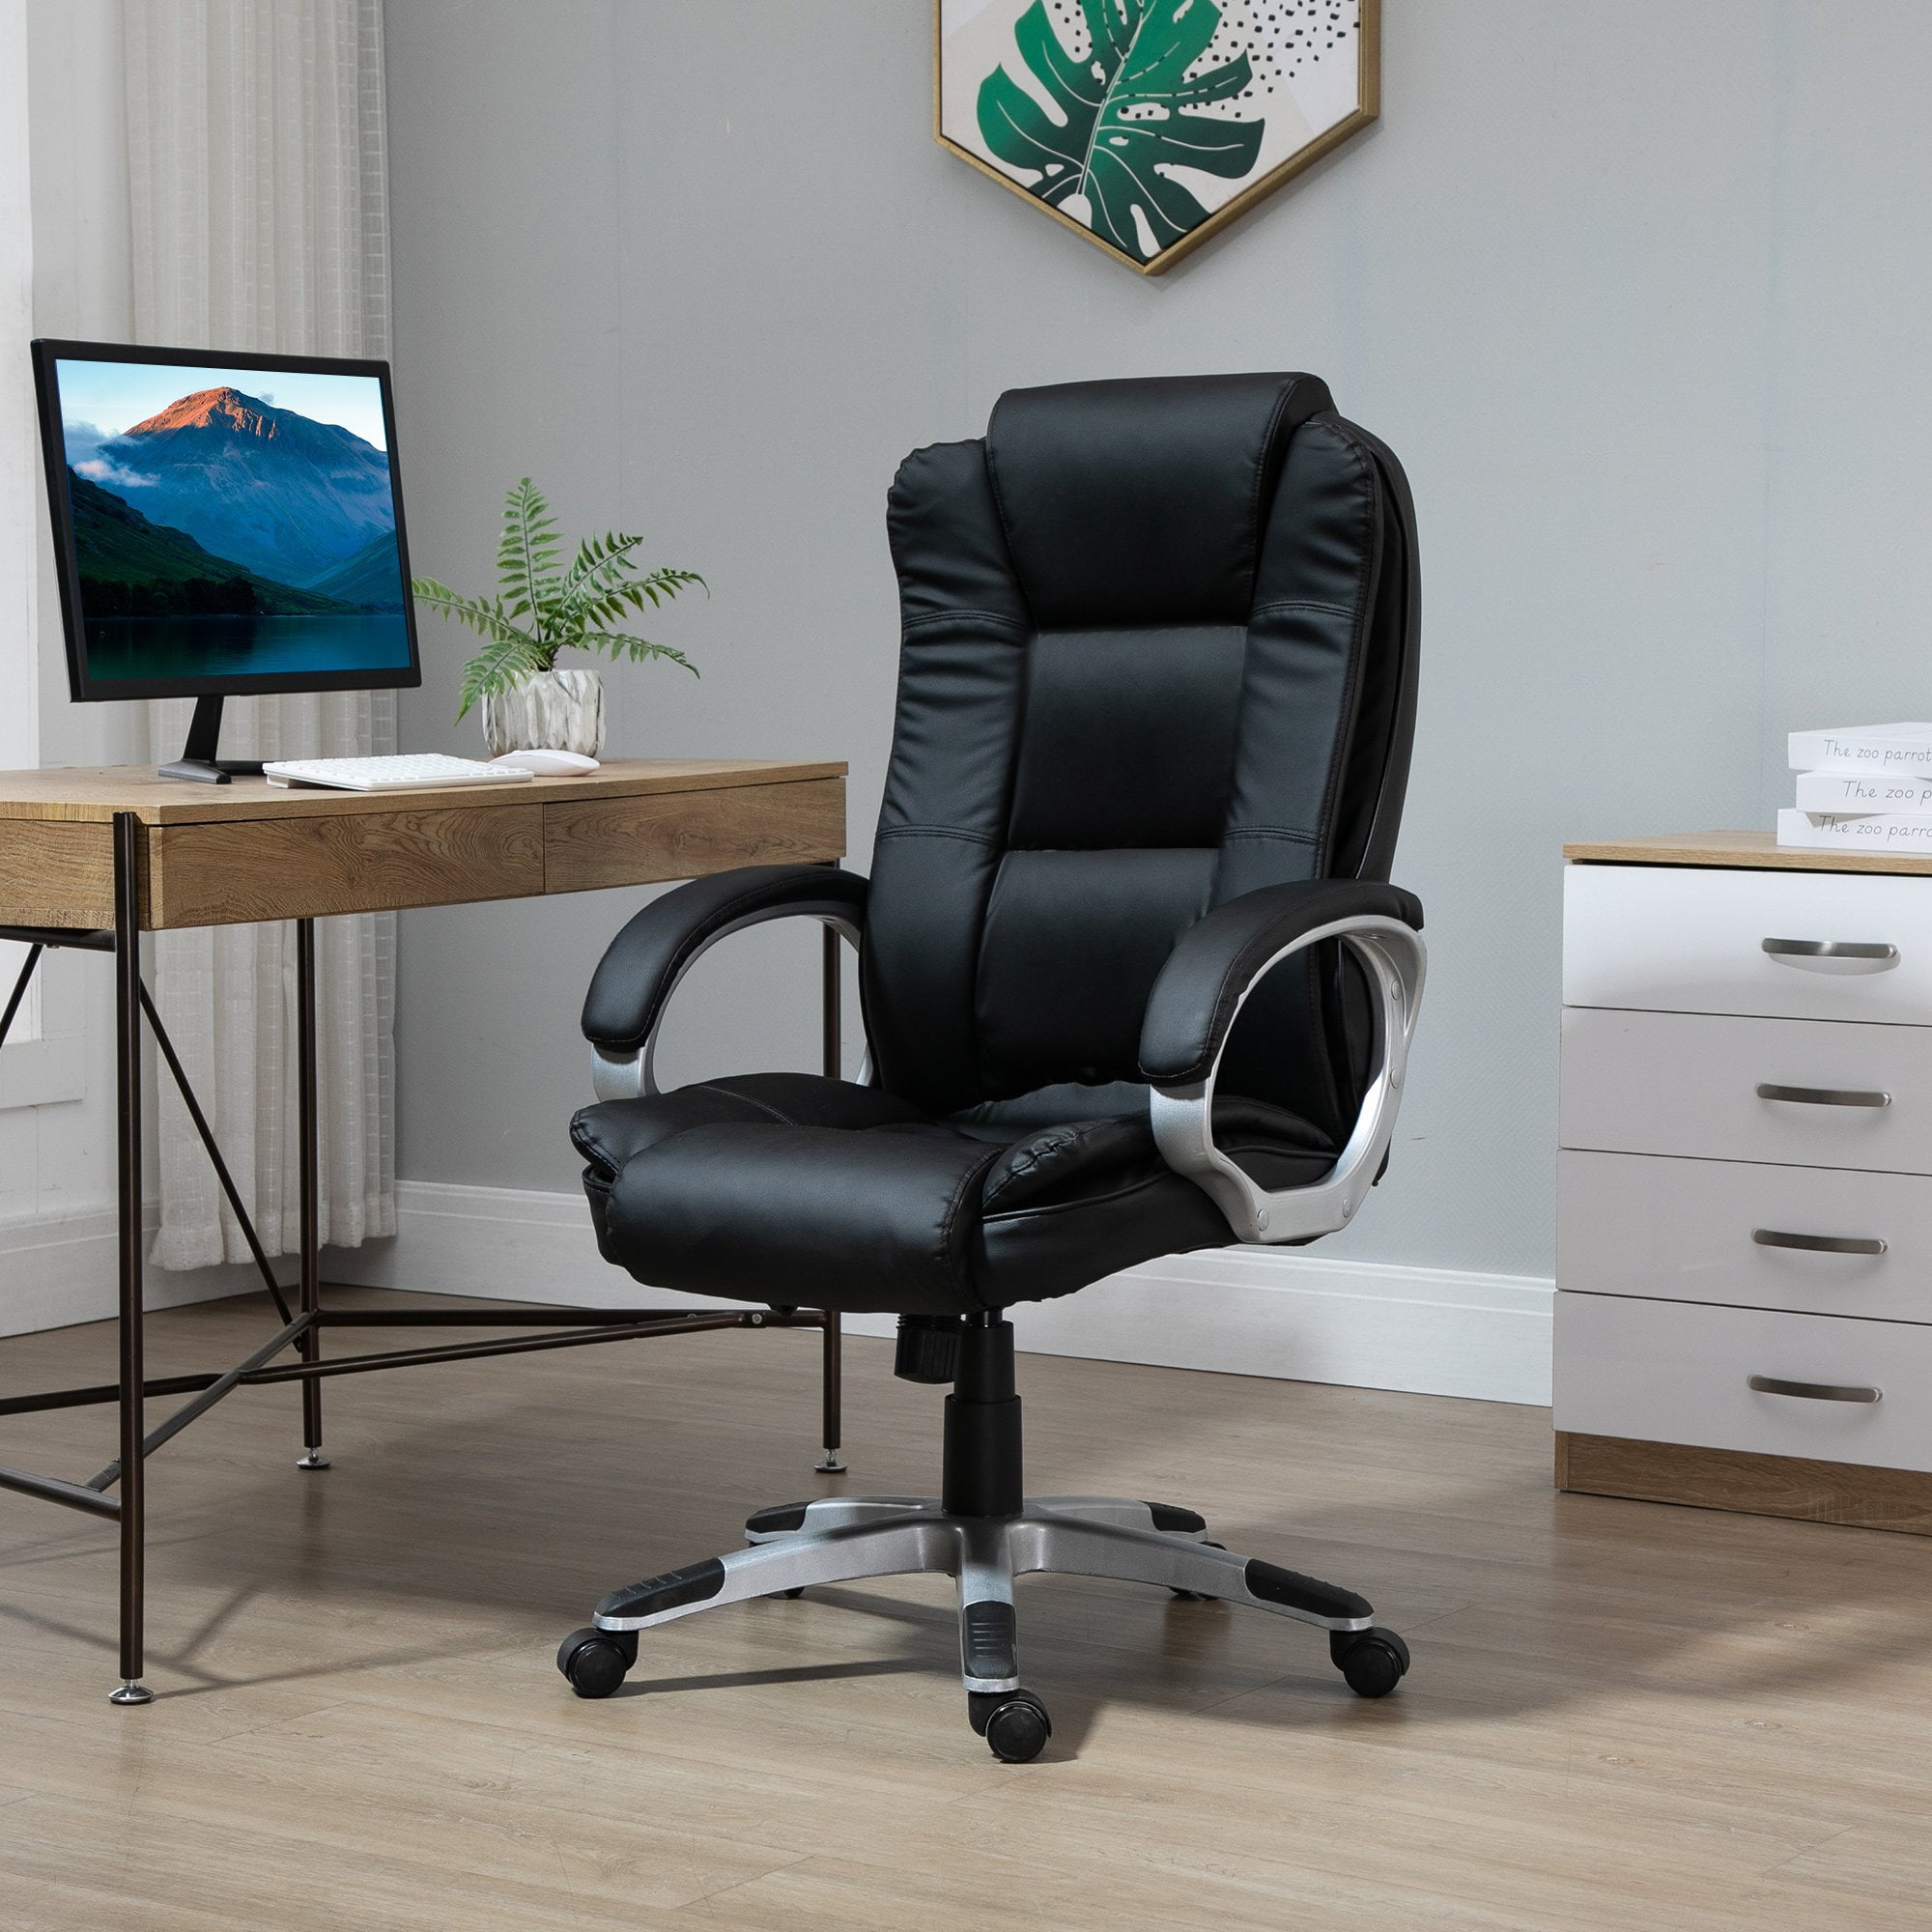 Andoer High Back Executive Office Chair Adjustable Ergonomic Desk Seat ...